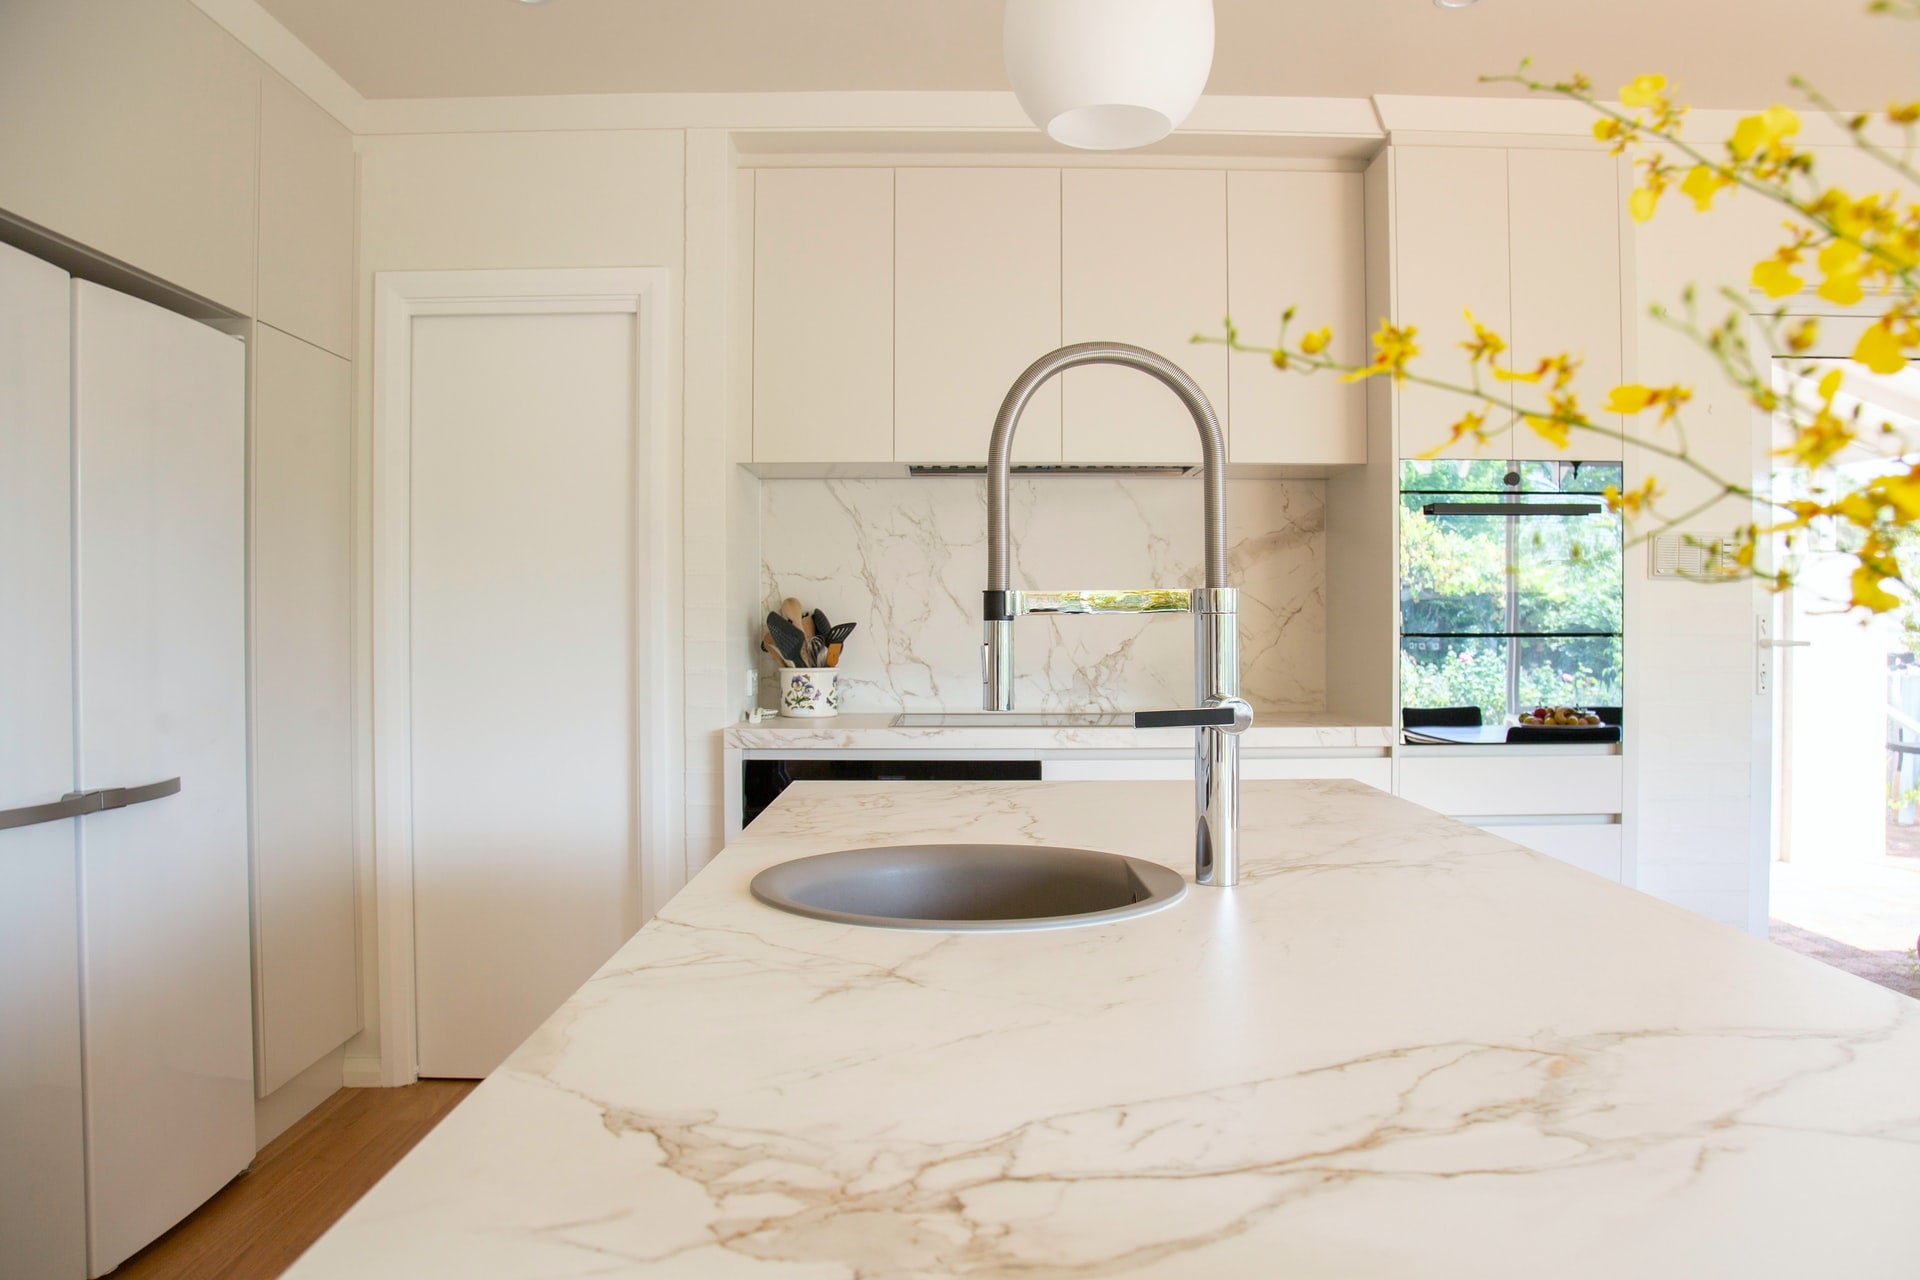 Kitchen Sink Design Choices To Get The Modern Look